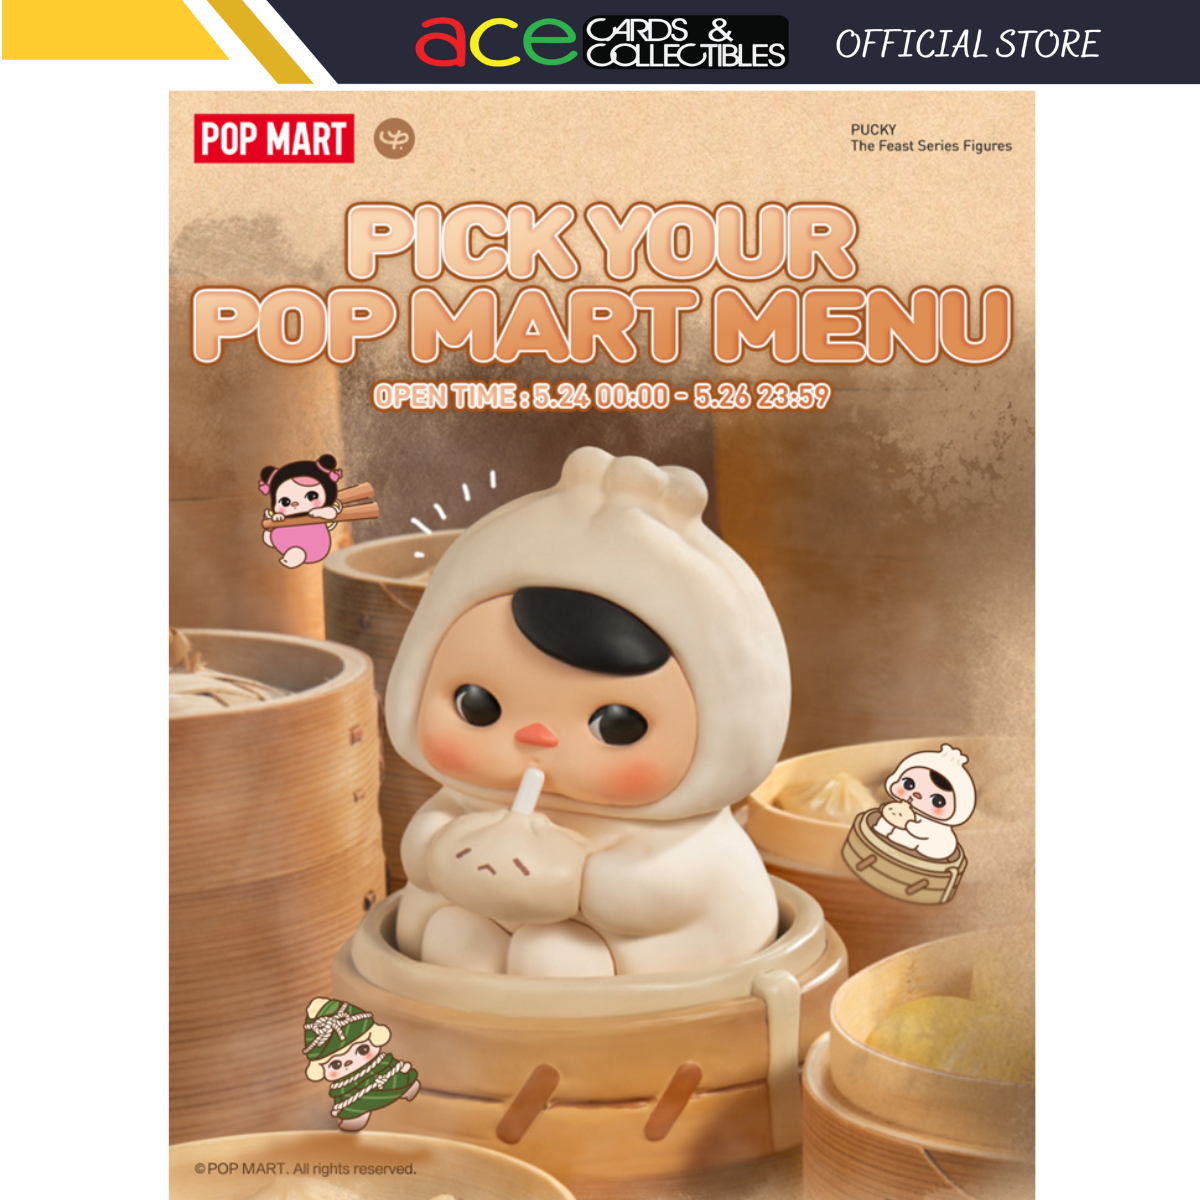 POP MART PUCKY The Feast Series-Single Box (Random)-Pop Mart-Ace Cards & Collectibles